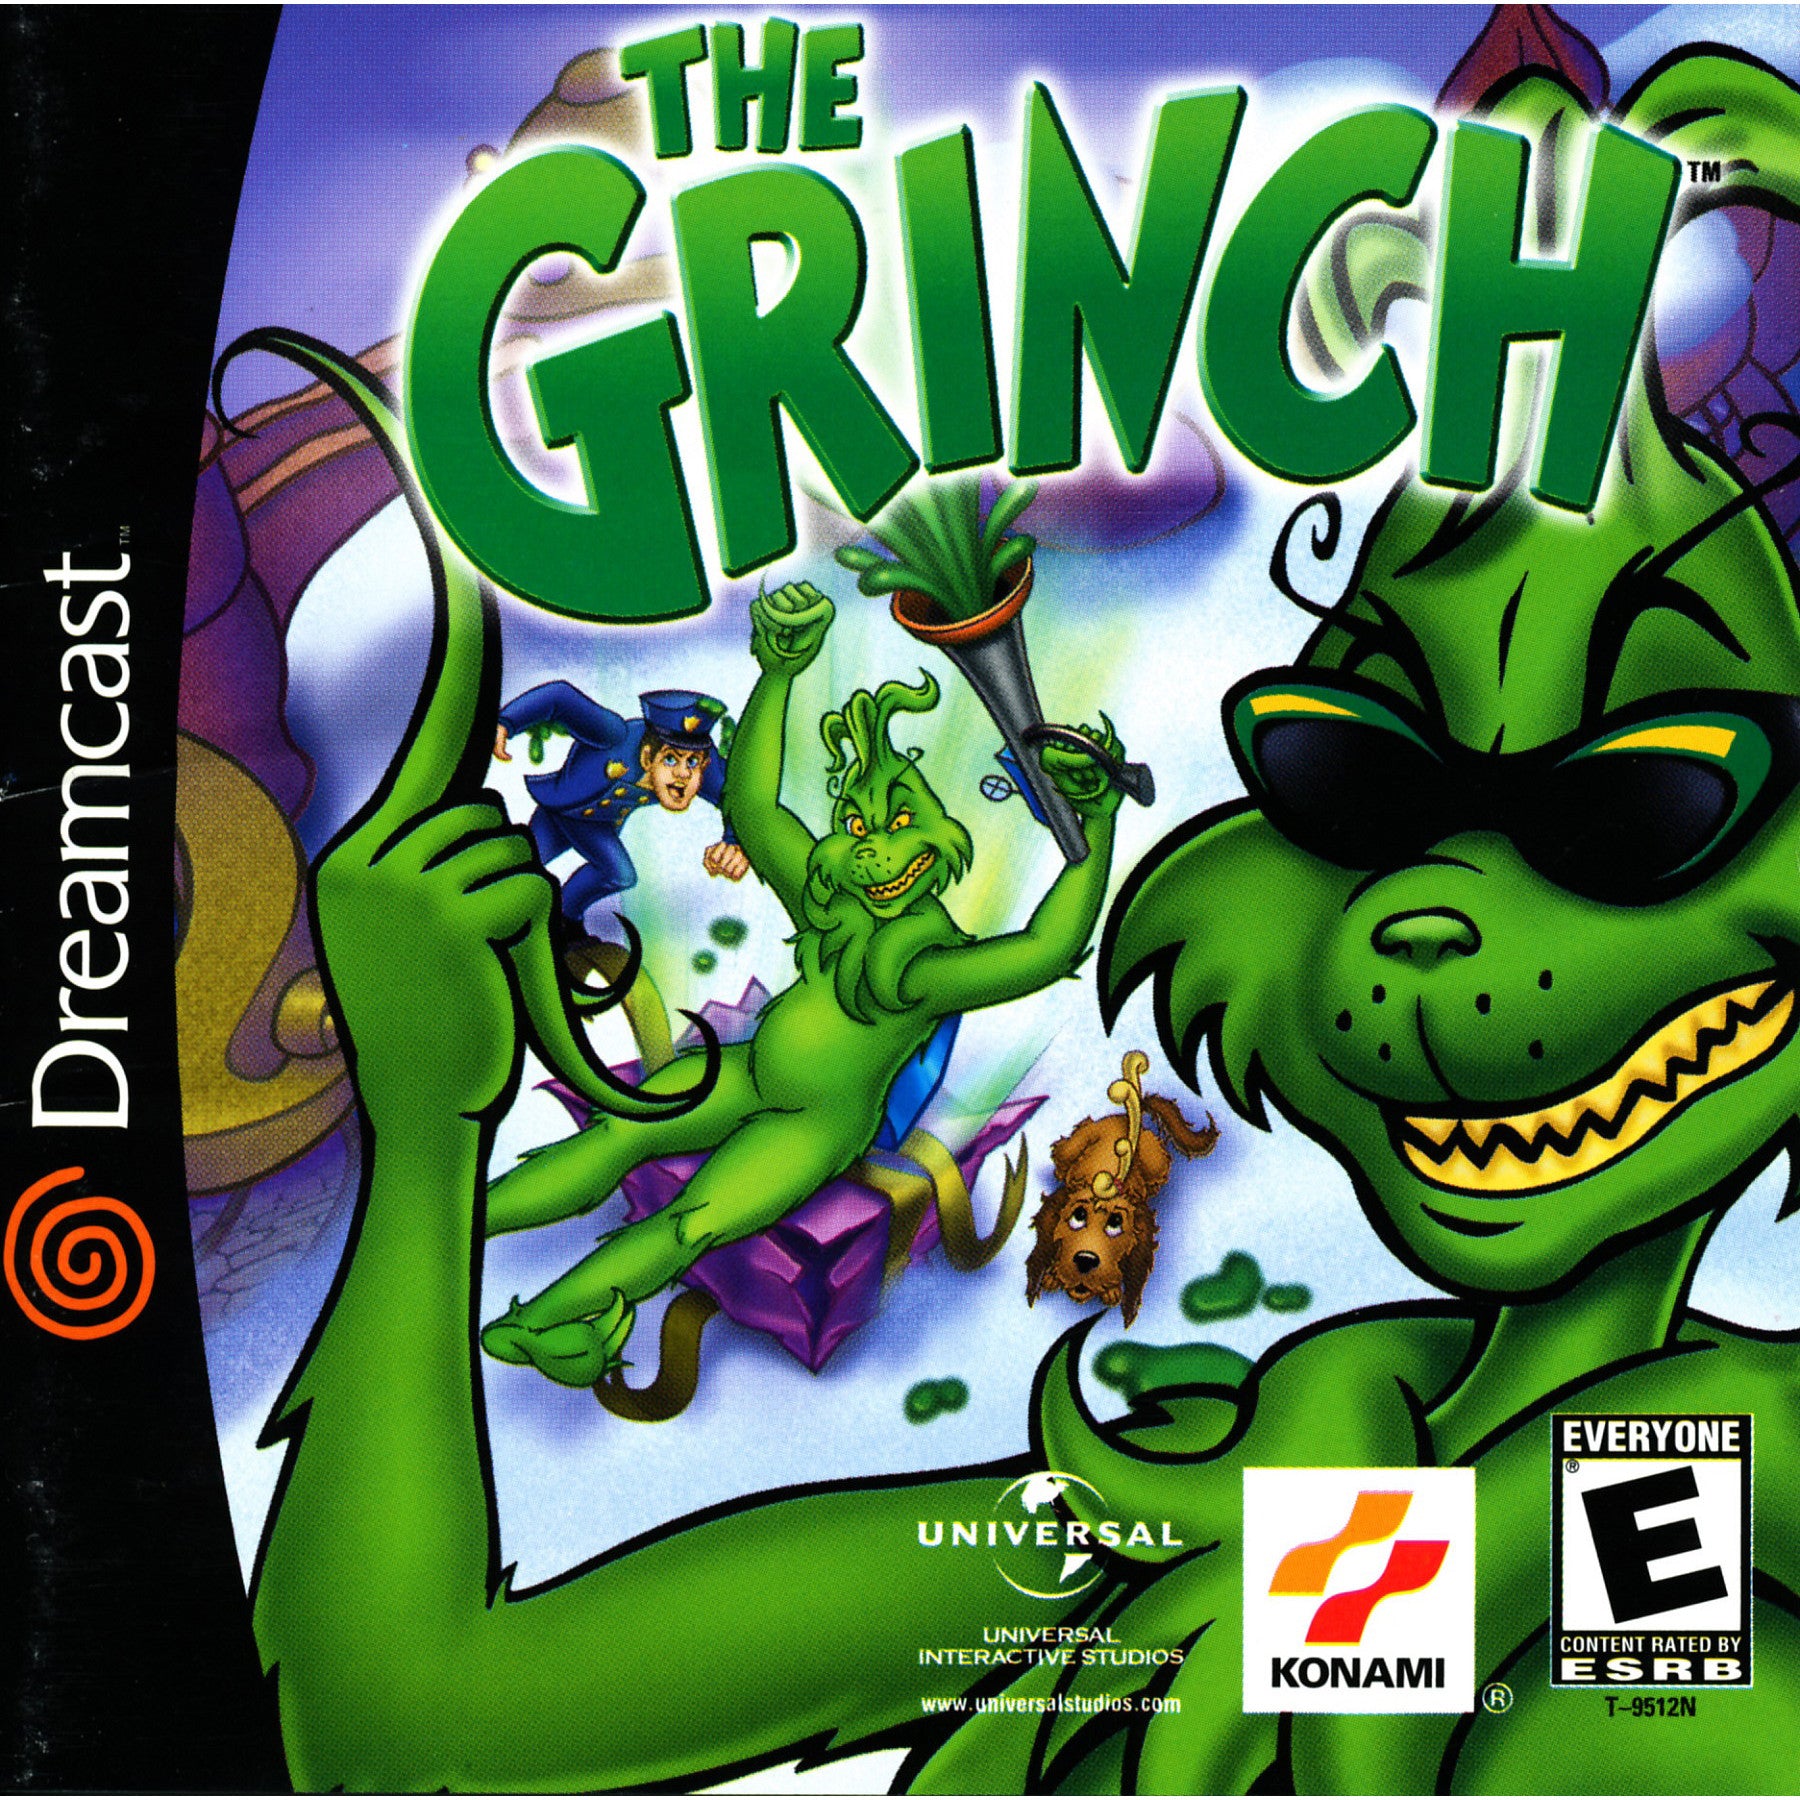 The Grinch - Sega Dreamcast Game - Complete